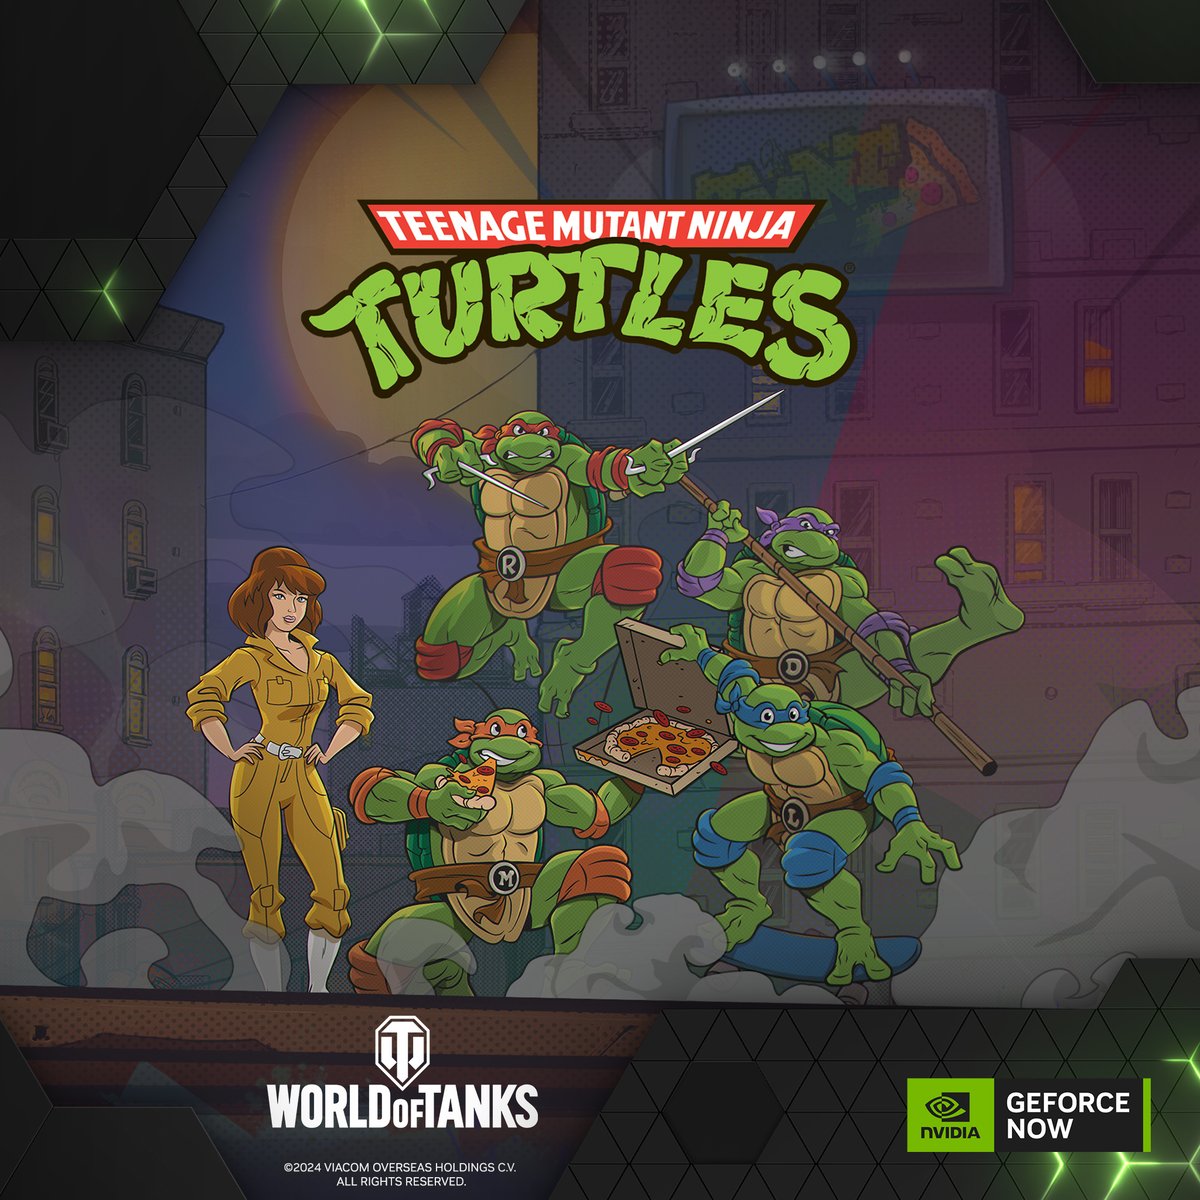 Cowabunga, Commanders! 🤙

T The Teenage Mutant Ninja Turtles are in @worldoftanks. Enjoy the TMNT Battle Pass on the cloud until June 5 - turtle power!  🐢